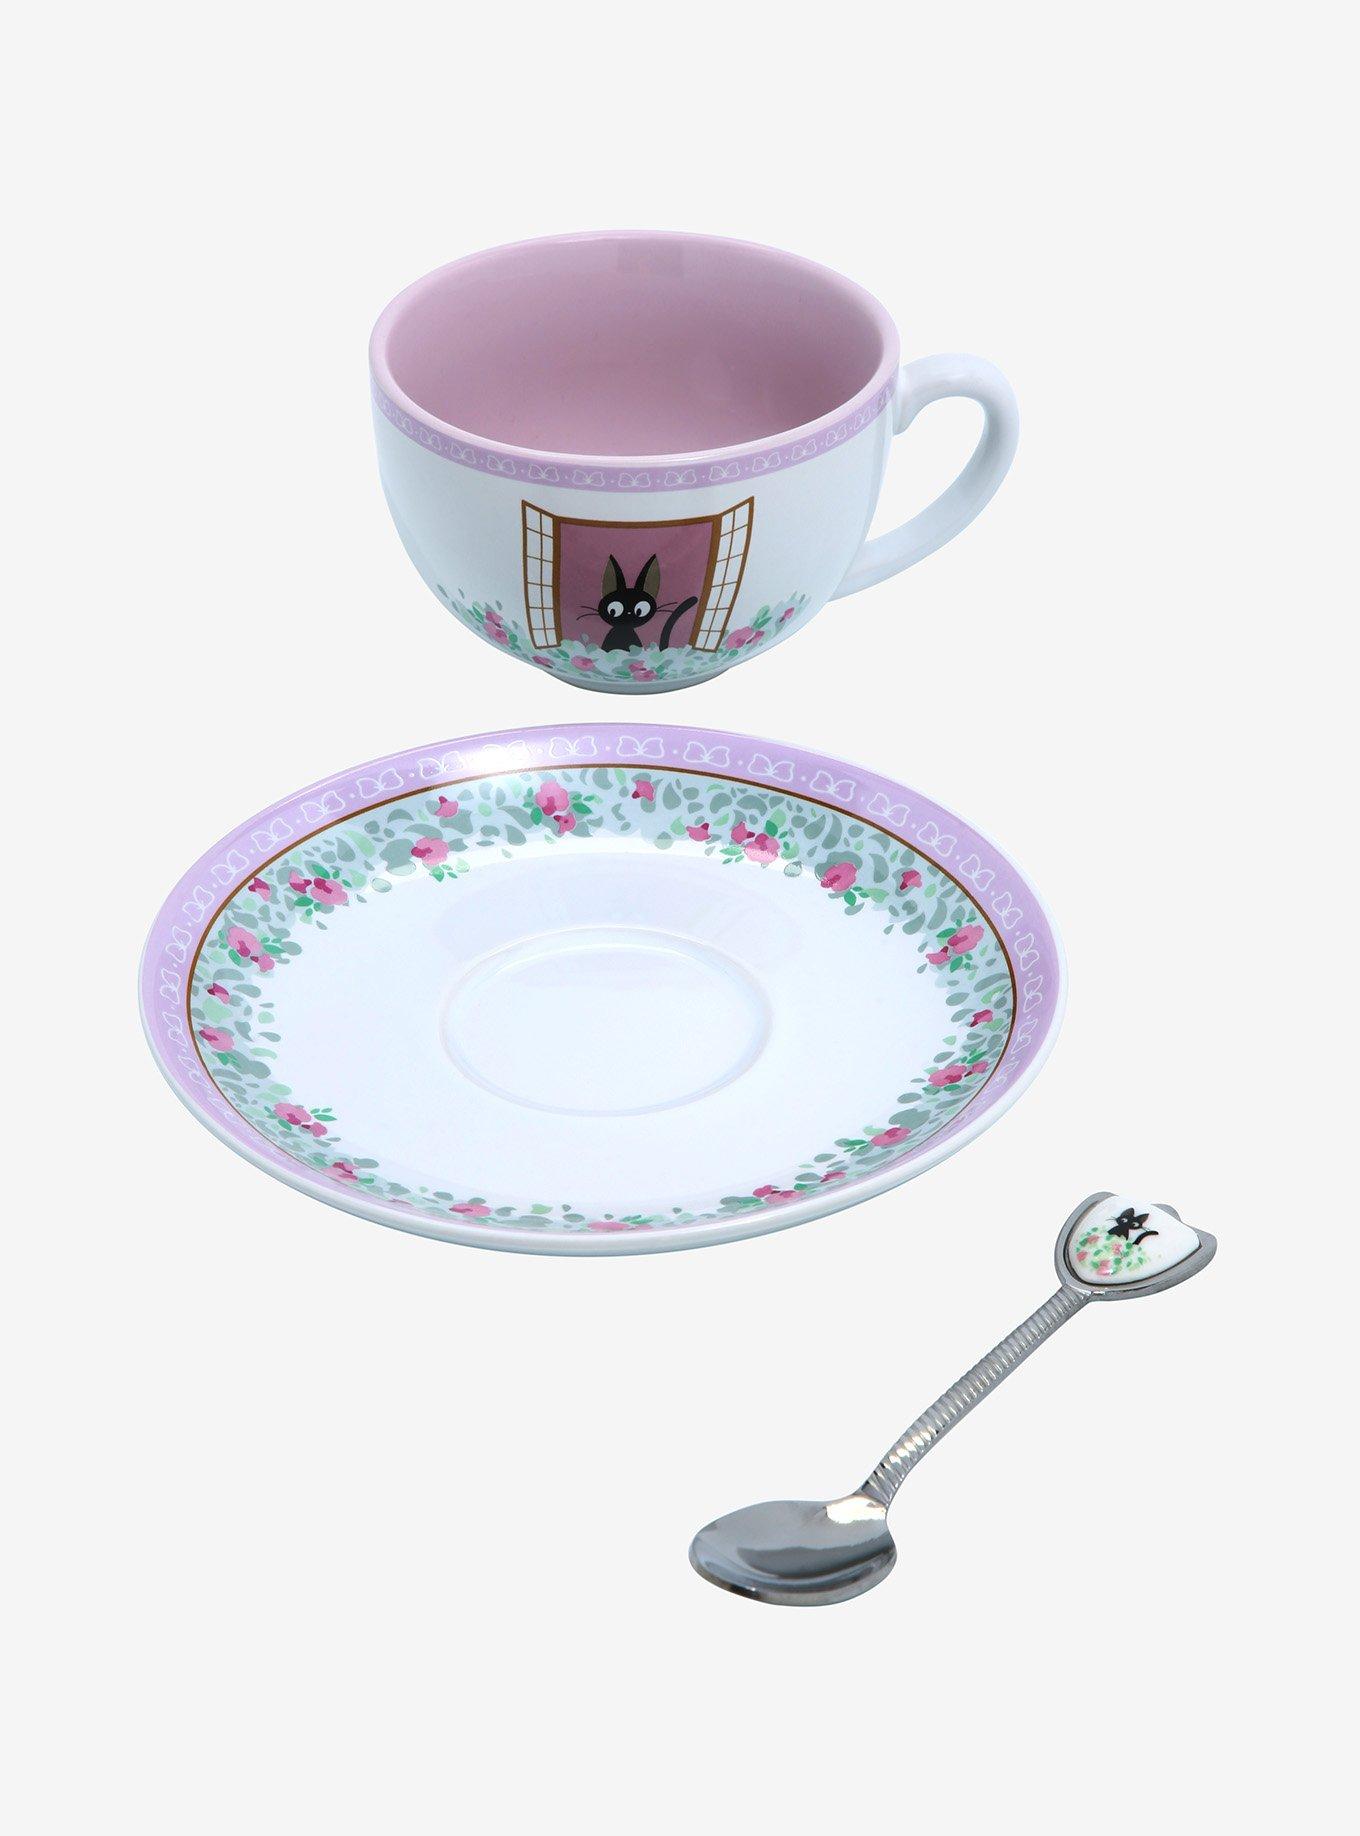 Studio Ghibli Ponyo Teacup & Spoon Set